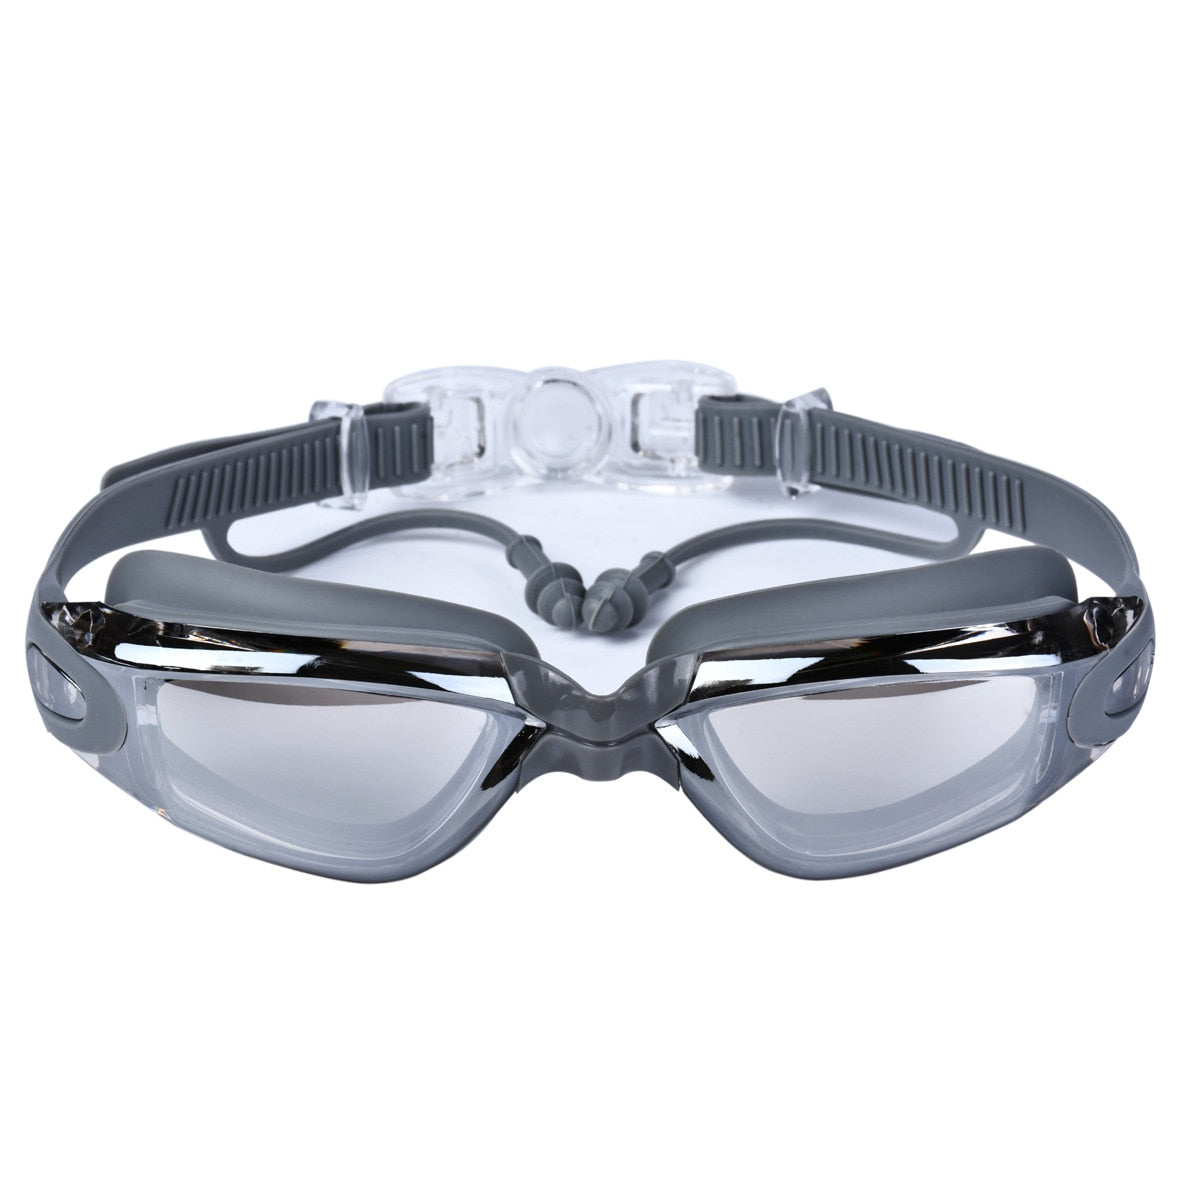 Adult Myopia Swimming Goggles Earplug